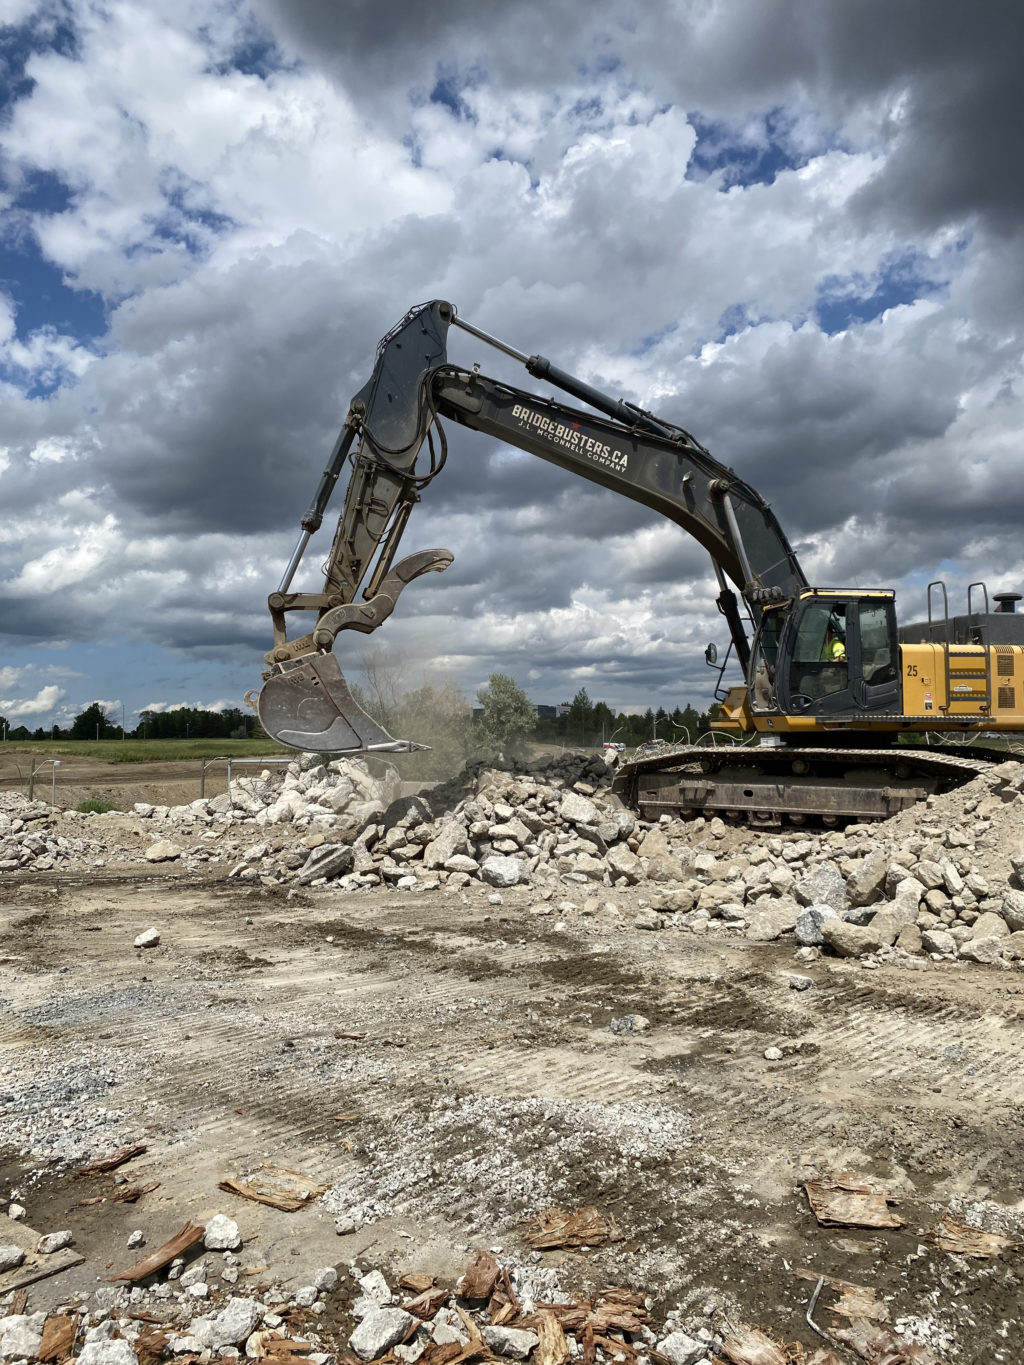 Jonathan Cunninghham moves concrete rubble in a John Deere 450D excavator.